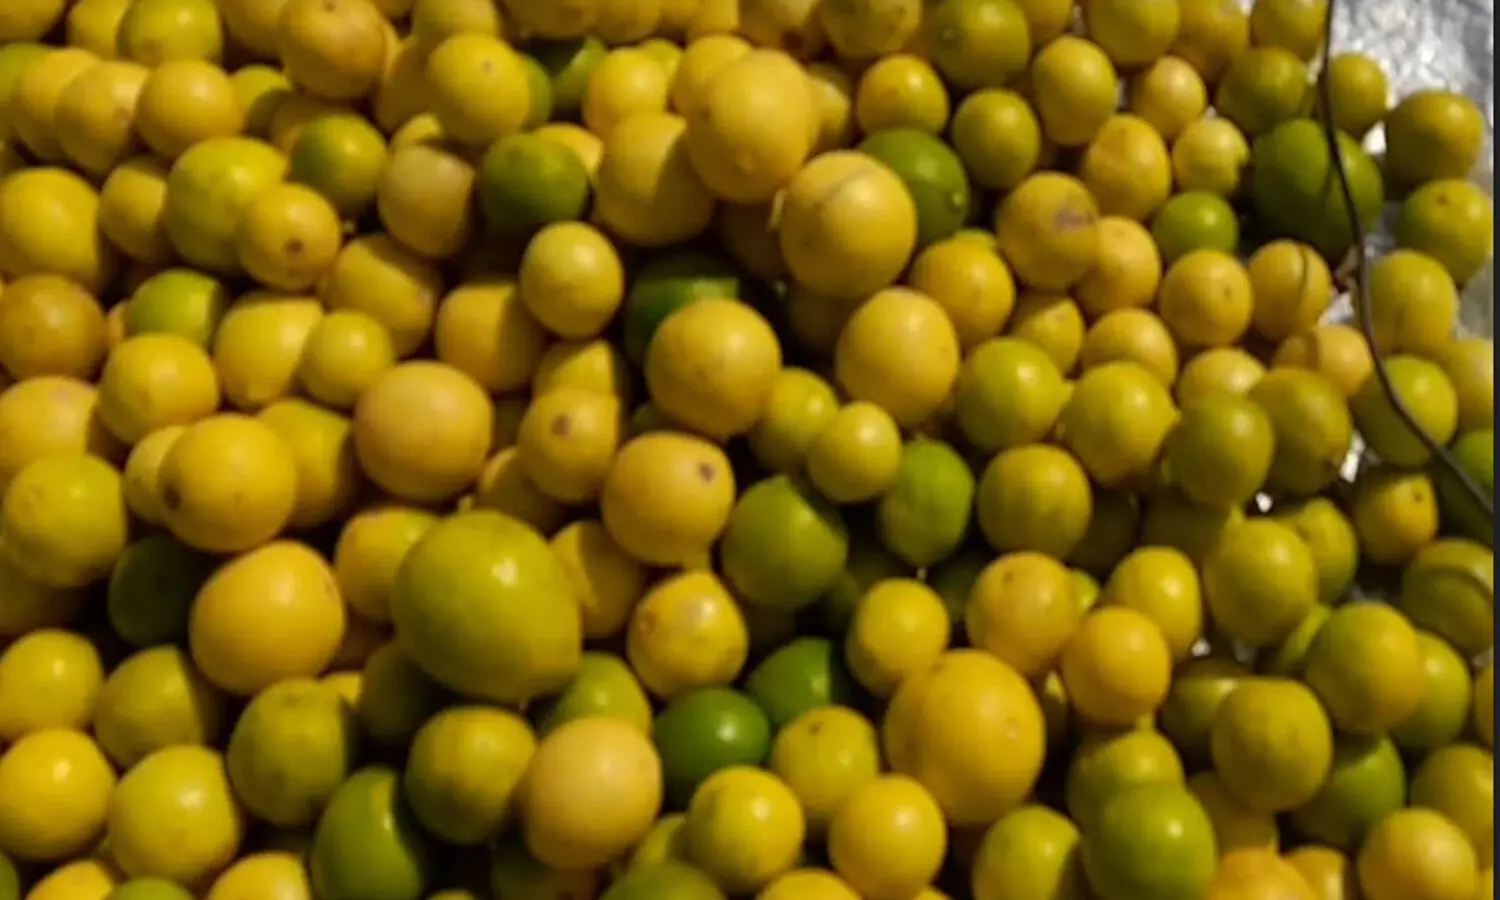 due to corona lemon rate increases in ghazipur market